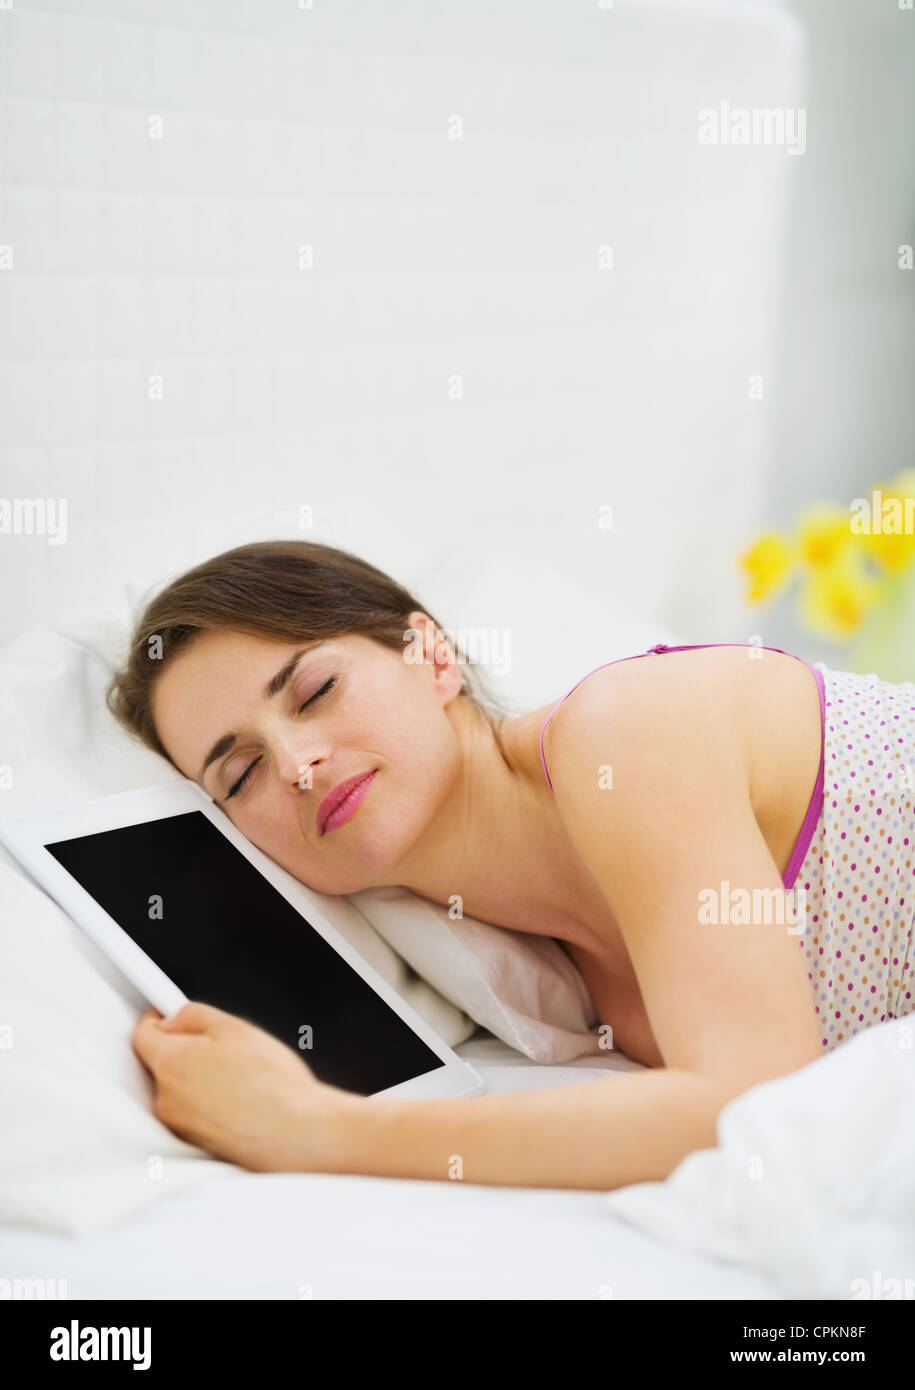 Happy girl sleeping embracing tablet PC Stock Photo